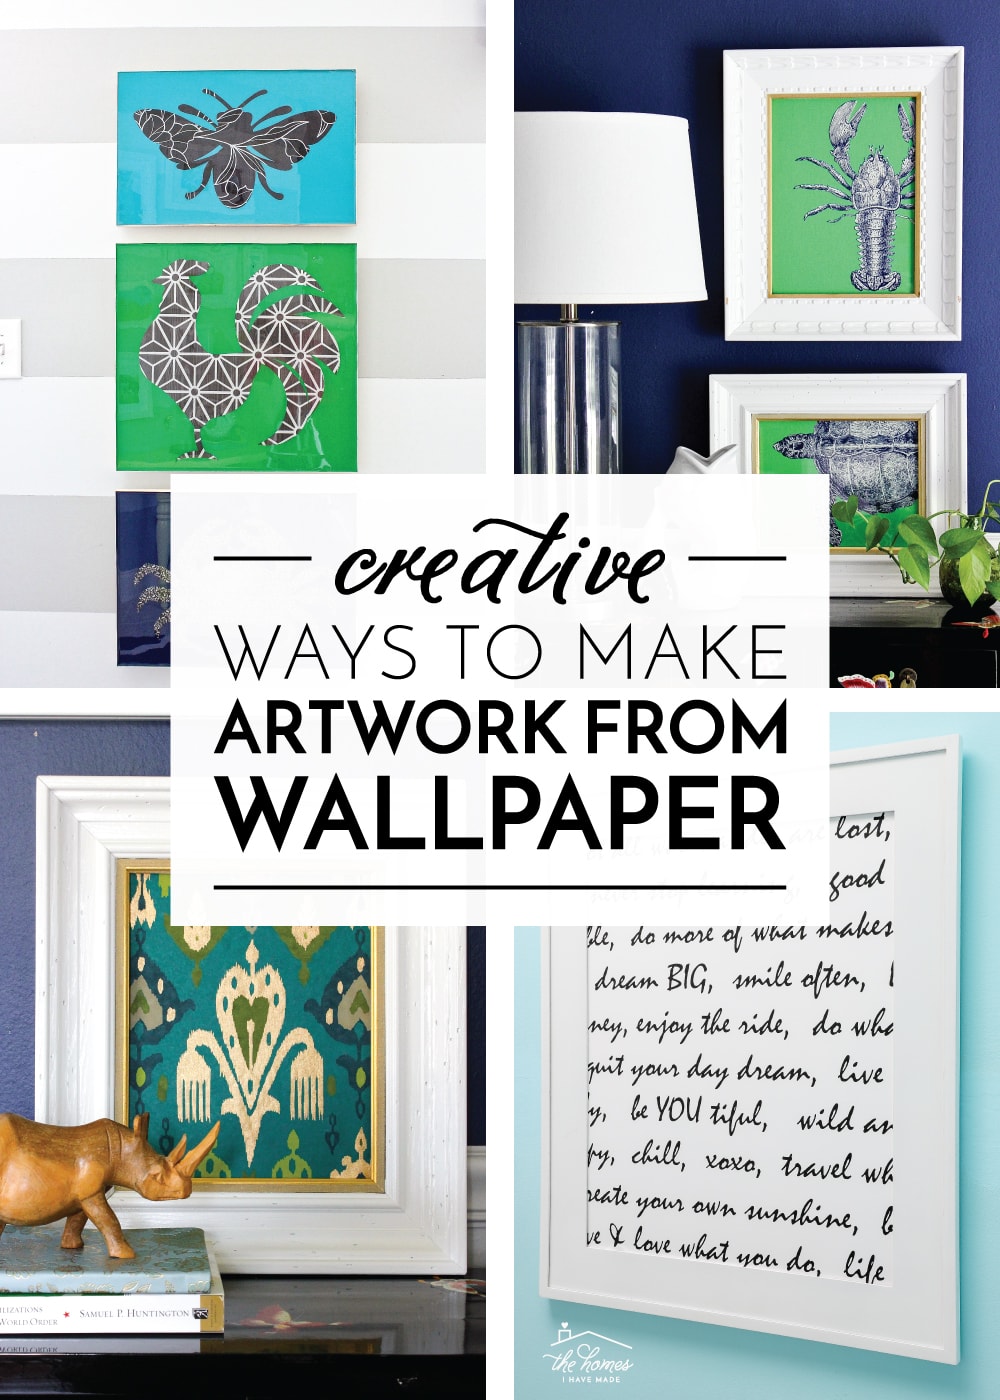 How to Frame Wallpaper As Artwork